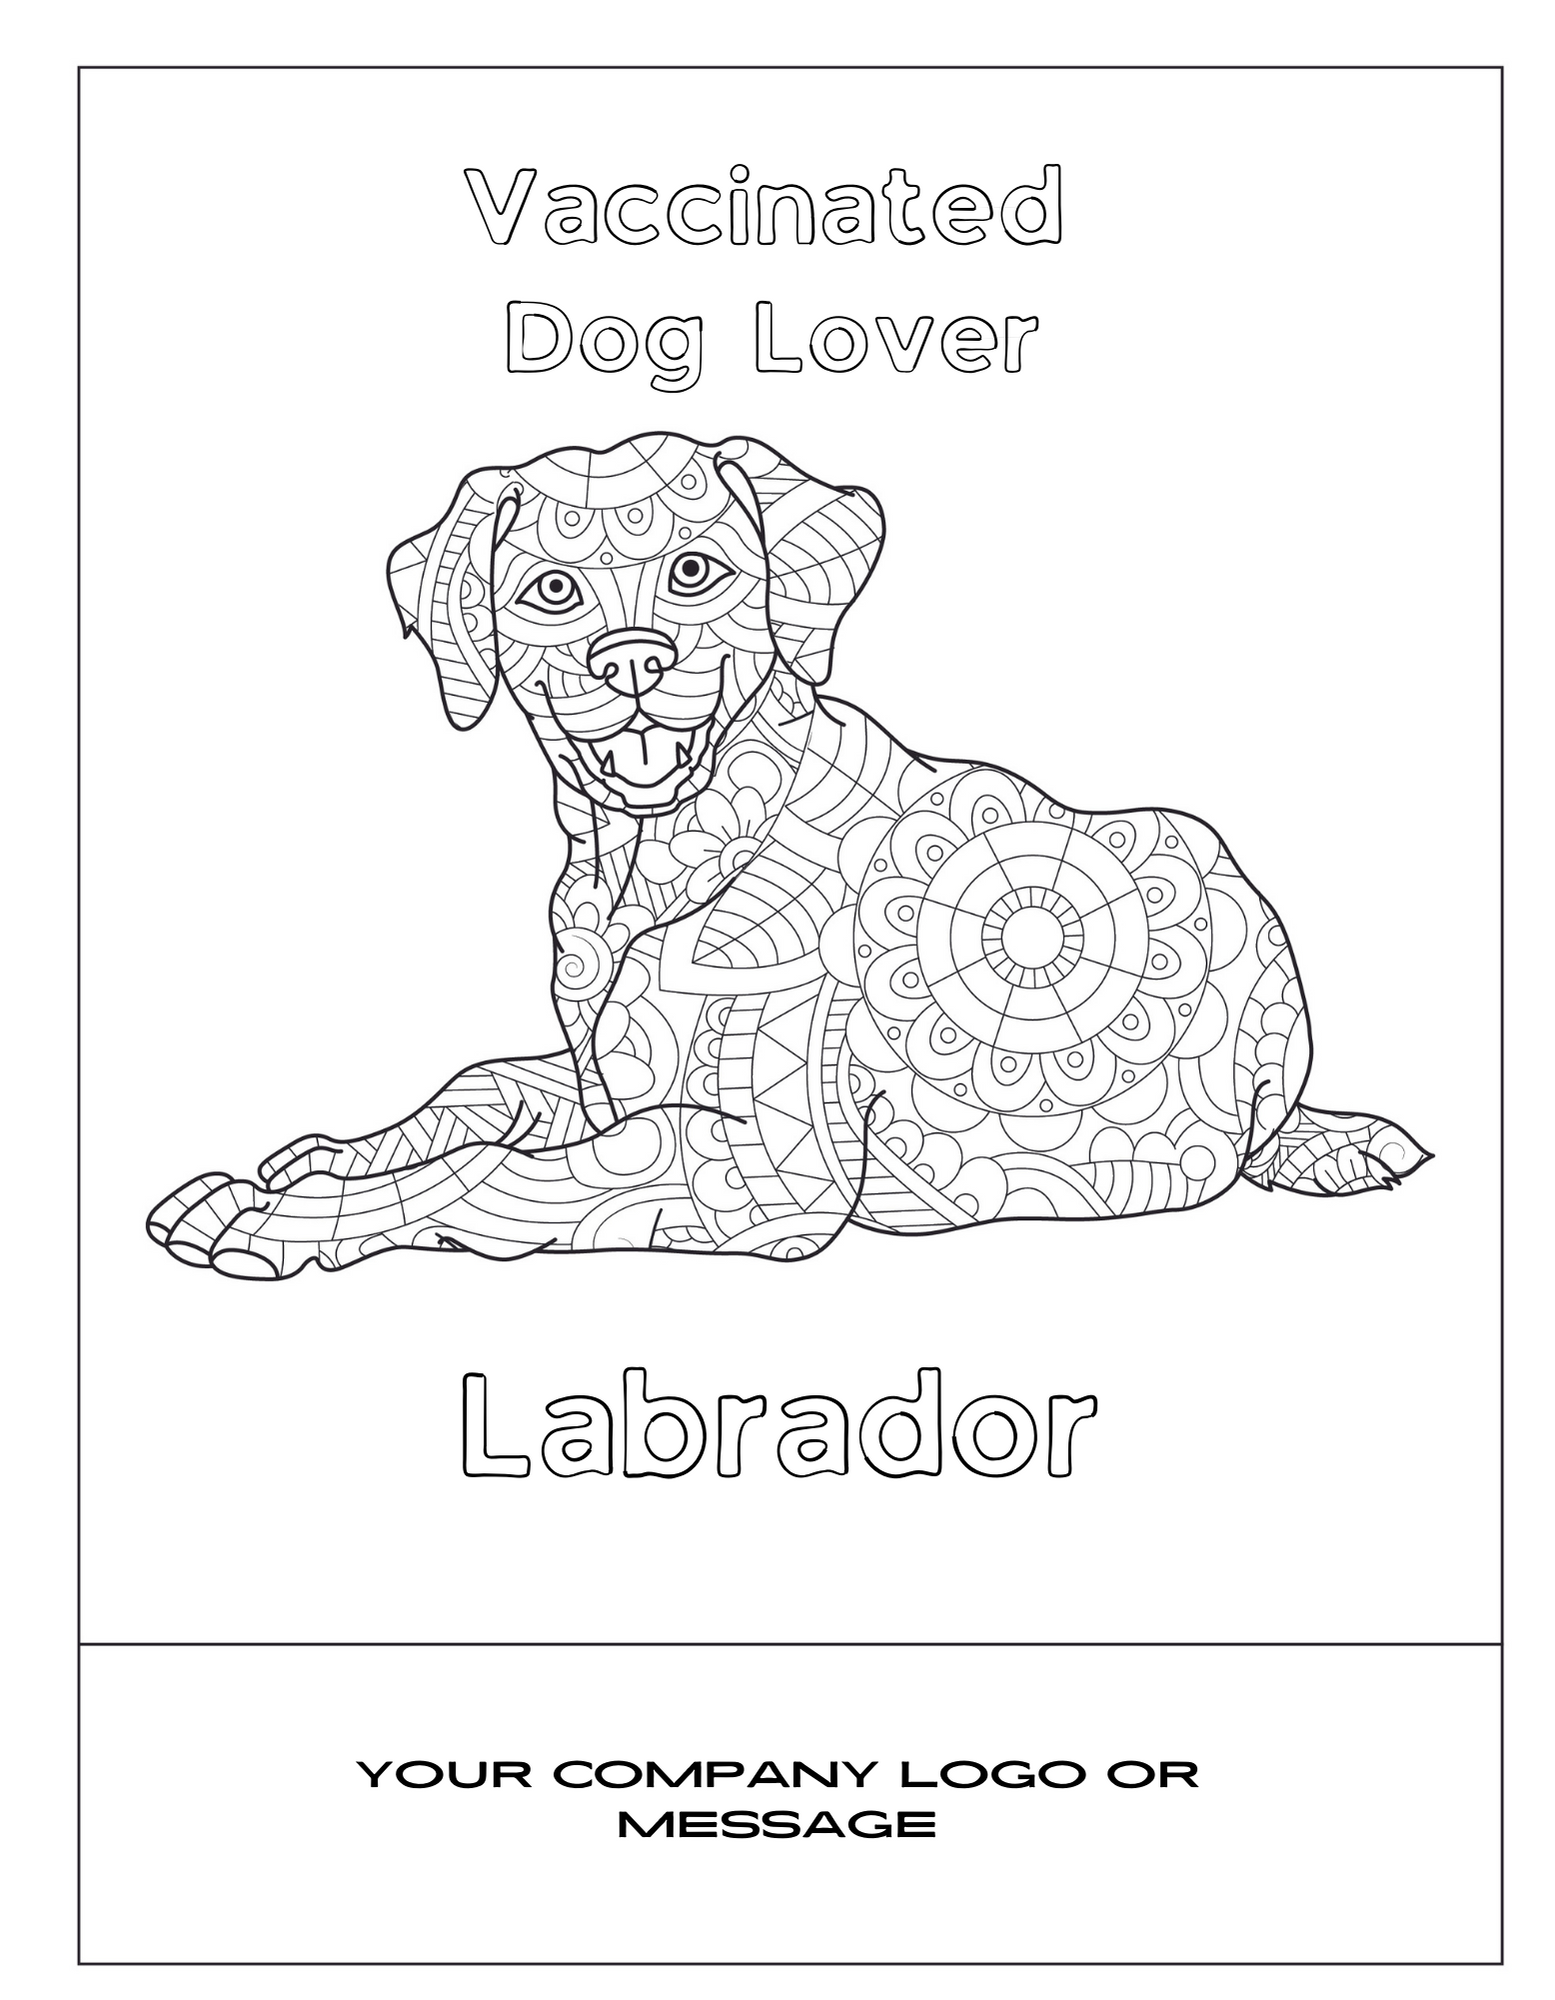 Vaccinated Dog Lover Labrador Coloring Sheet